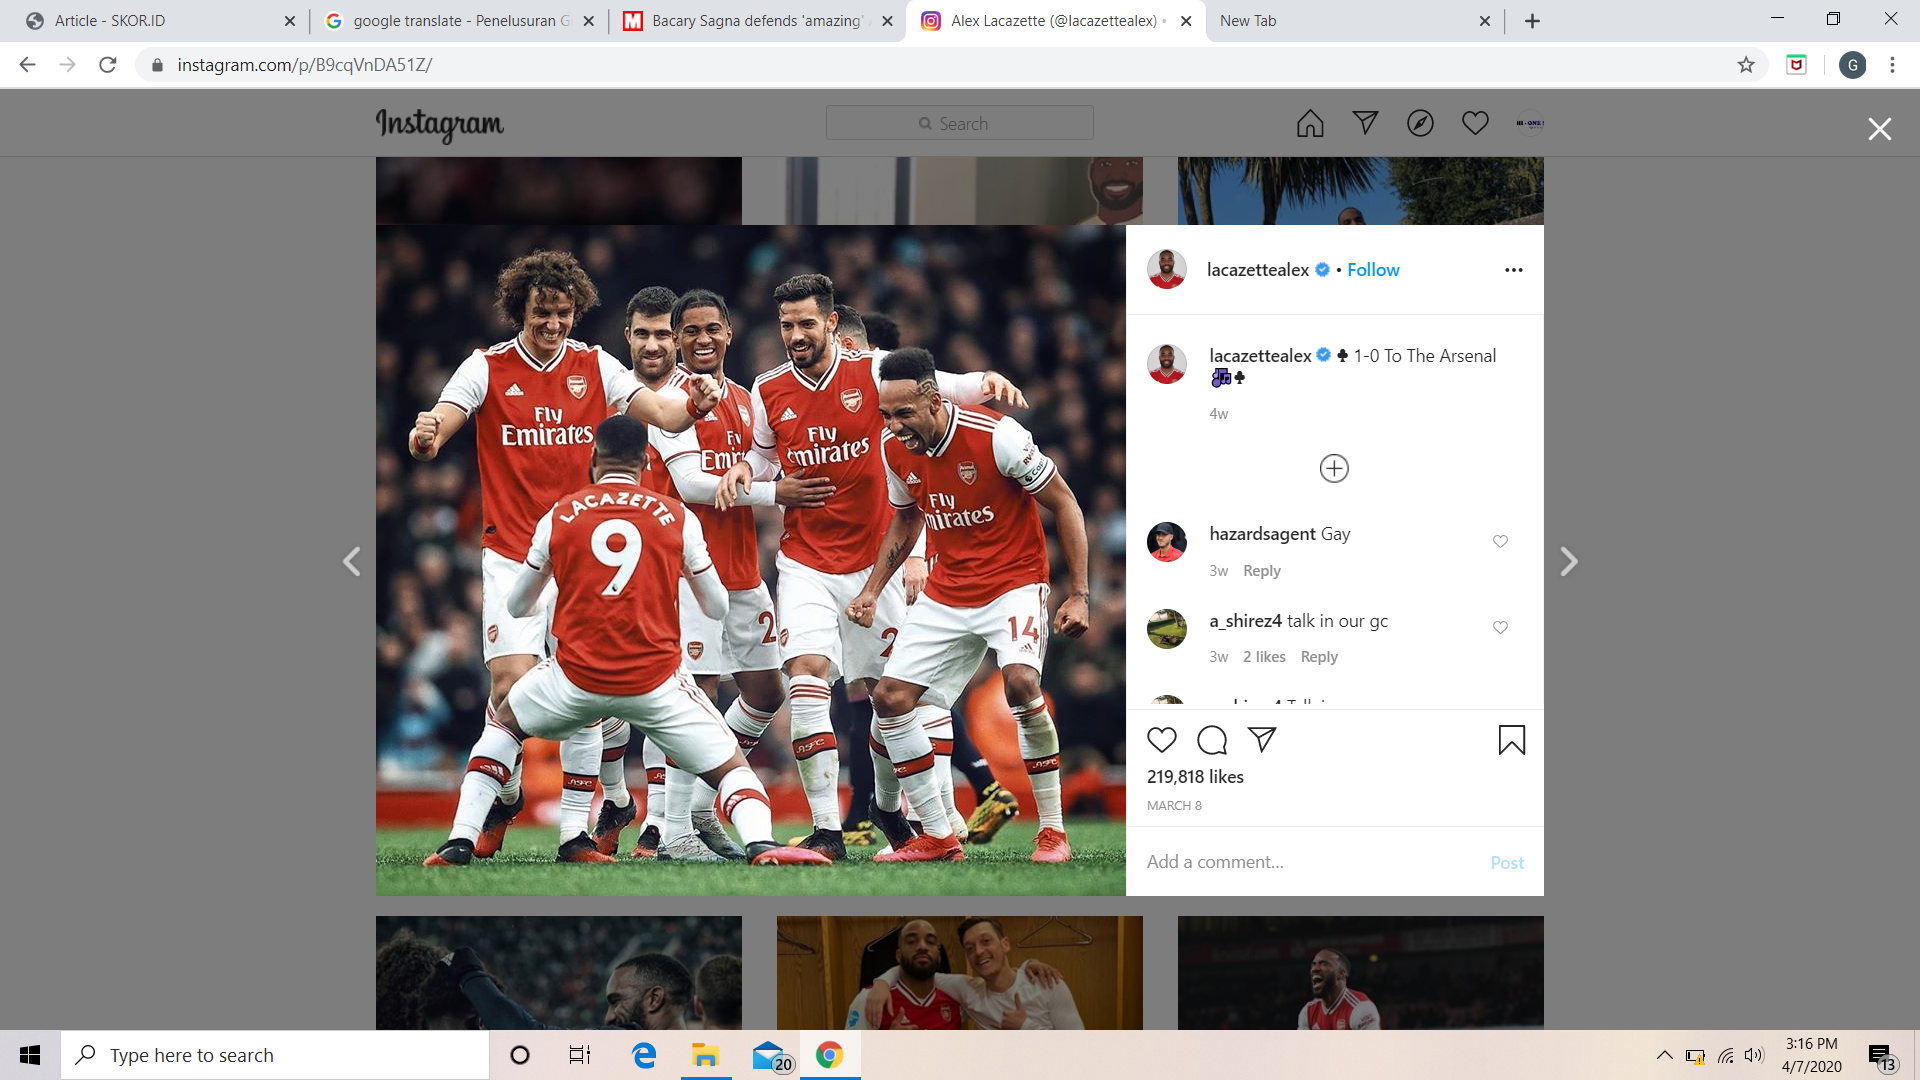 Acap Dikritik Fan Arsenal, Sagna Sebut Alexandre Lacazette Luar Biasa 